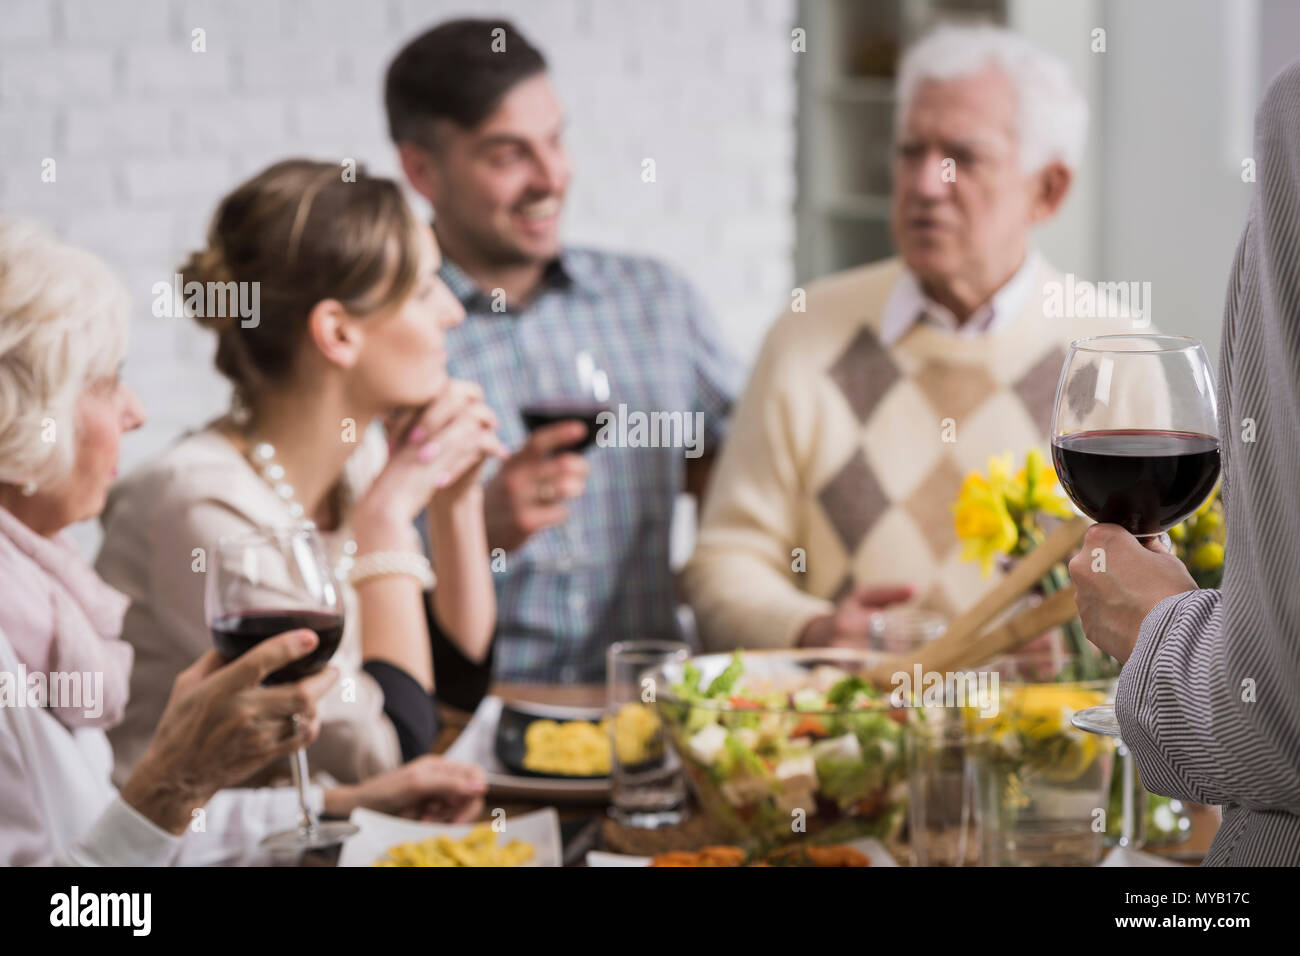 Familia Feliz sentado al lado de la tabla durante la comida, beber el vino. Foto de stock